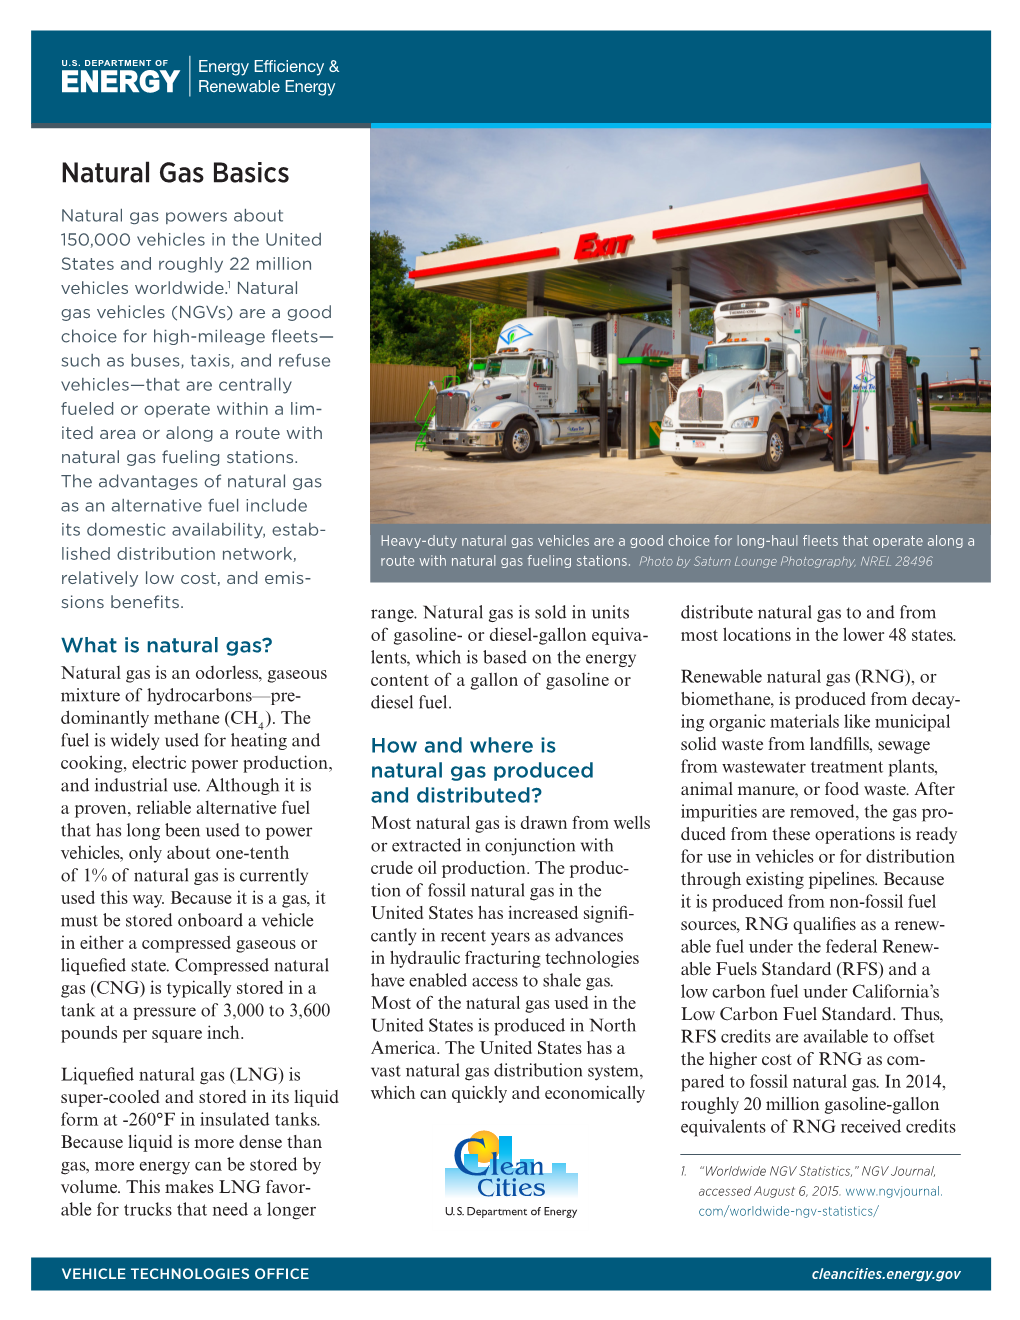 Natural Gas Basics (Brochure), US Department of Energy (DOE)